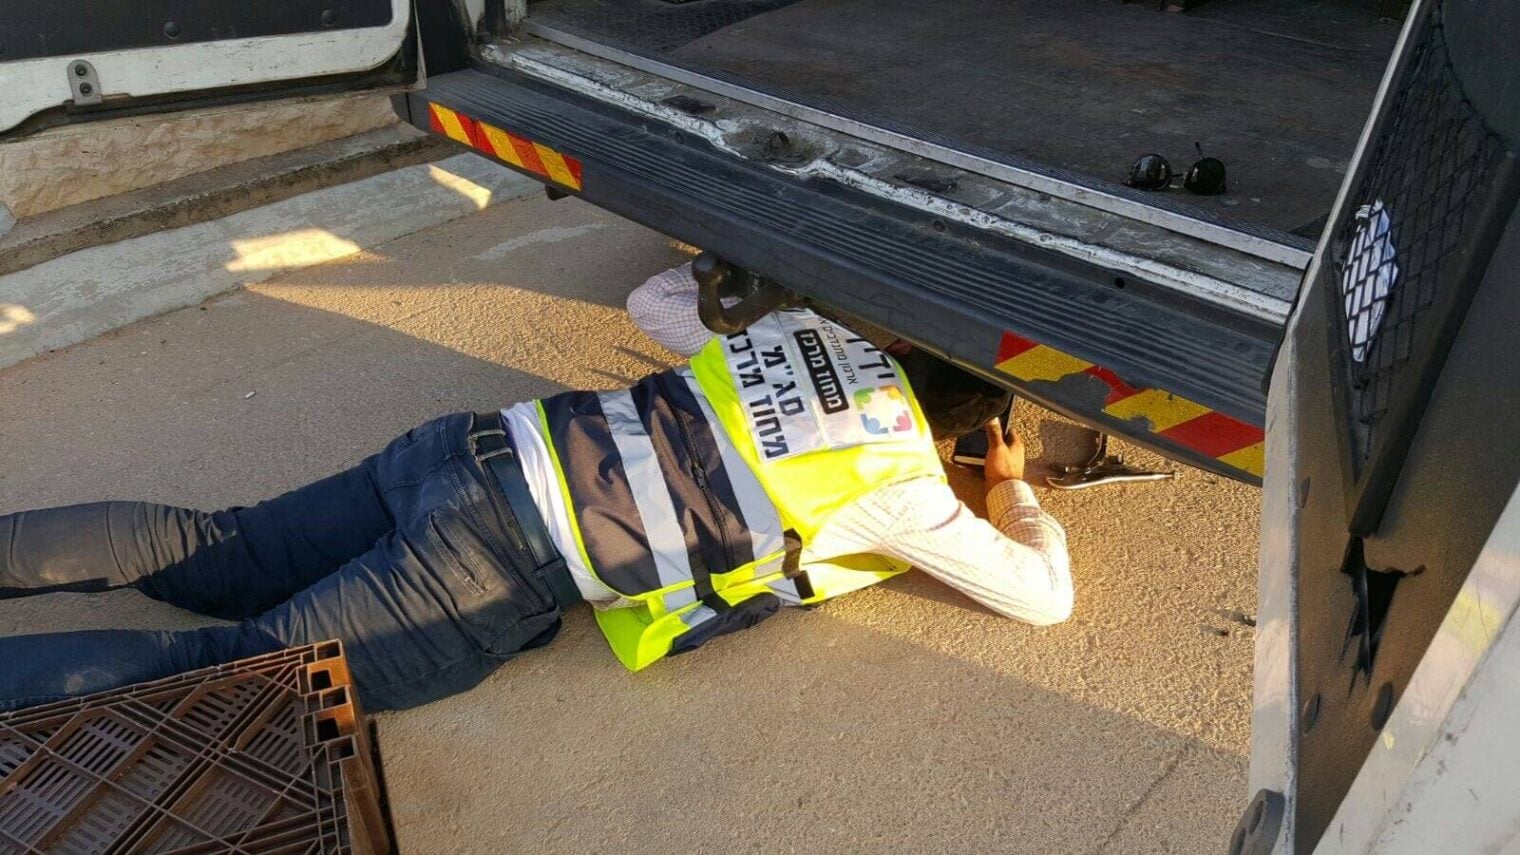 A Yedidim volunteer helps out a stranded motorist. Photo courtesy of Yedidim